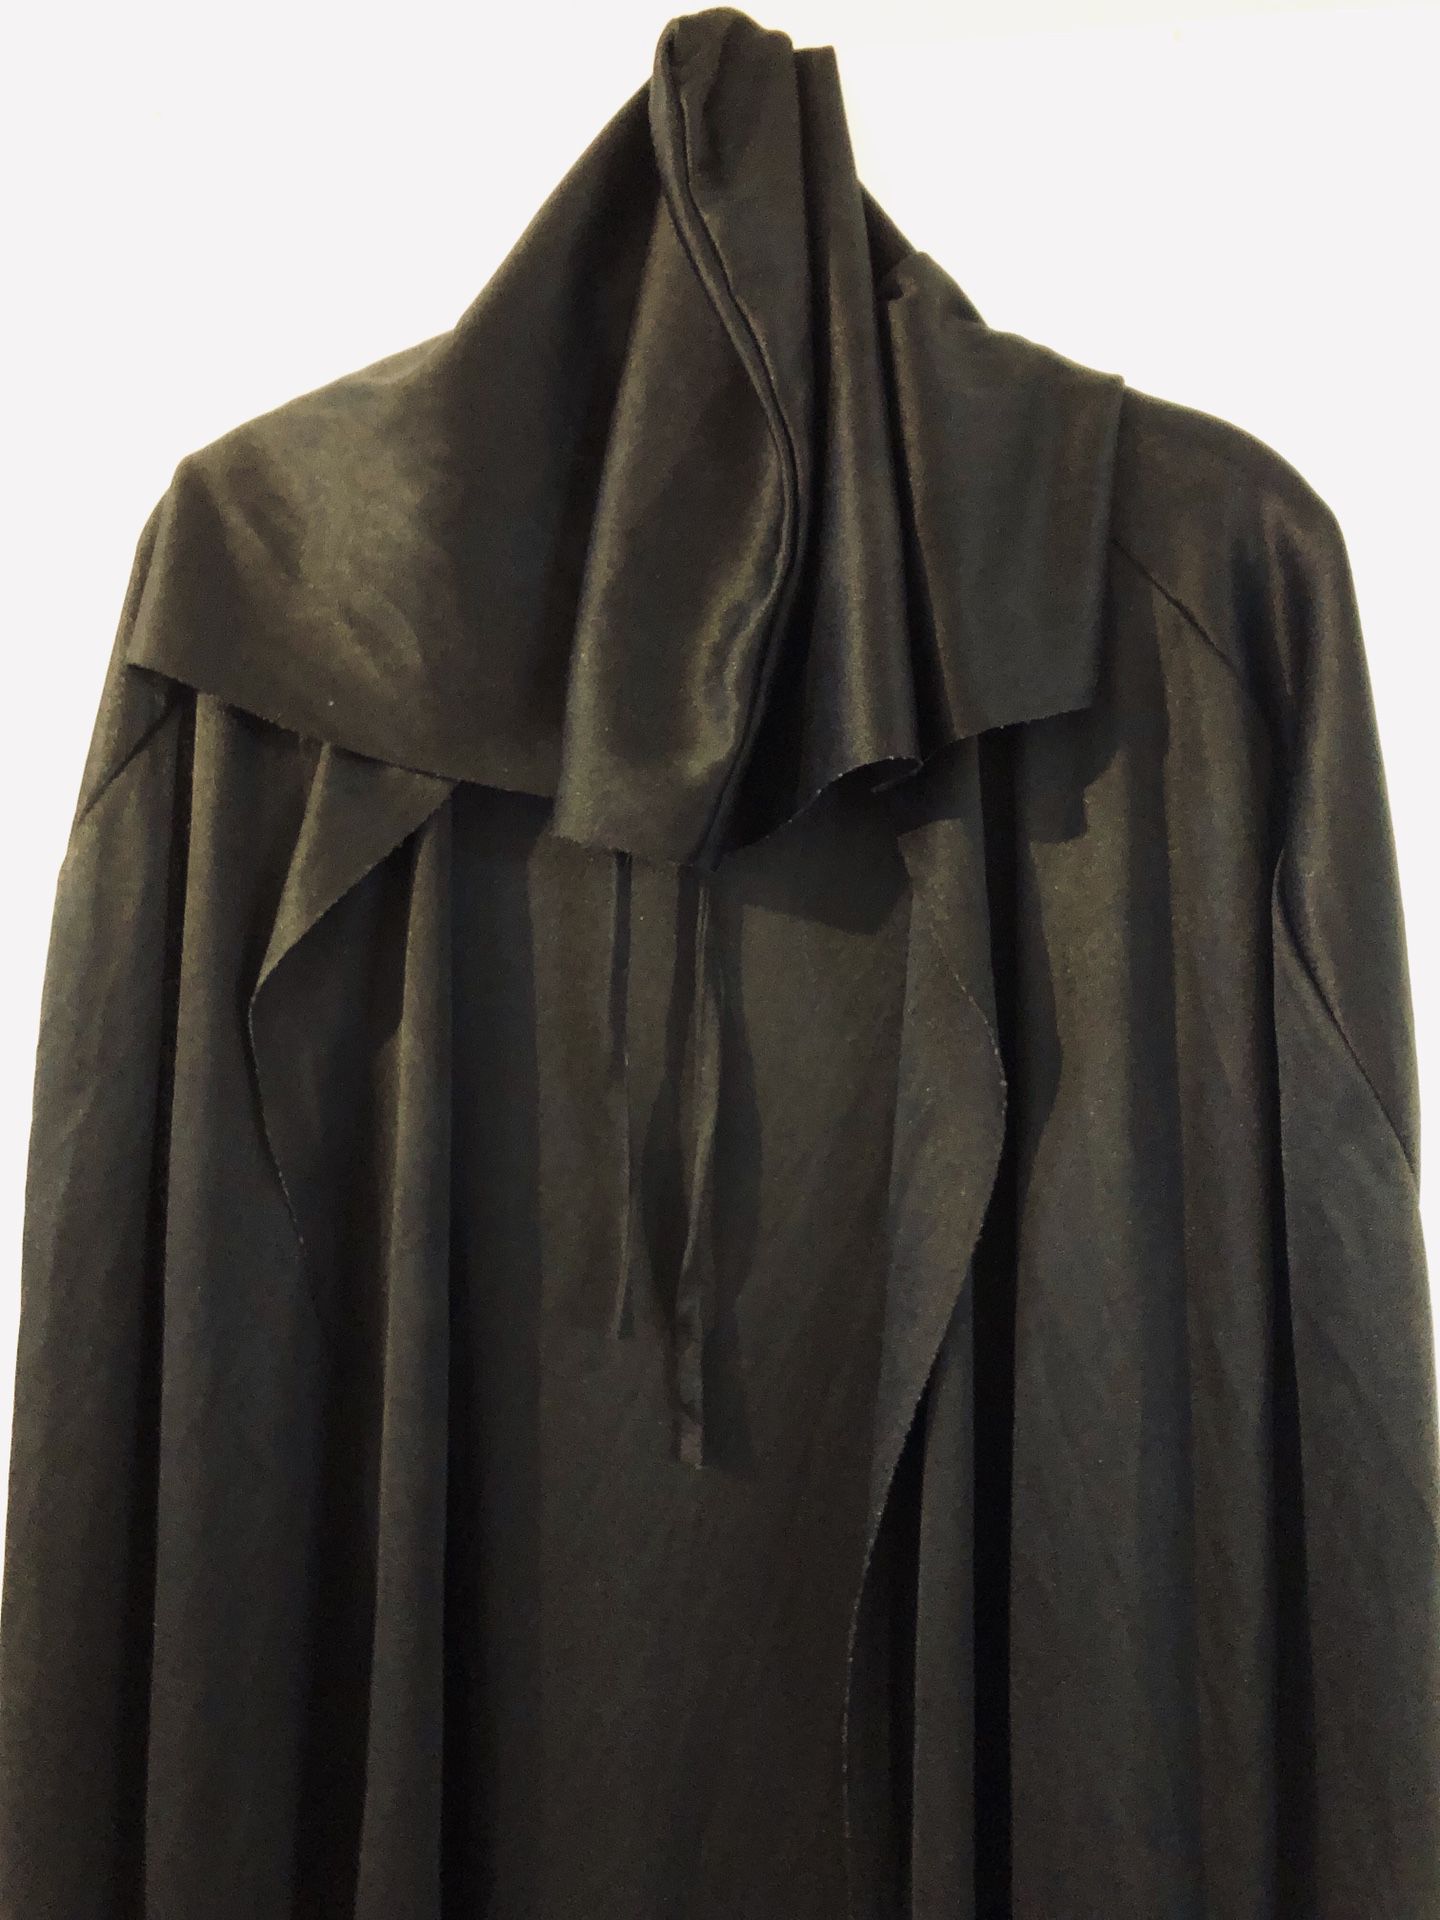 Adult Halloween Black Cape costume (vampire/ ect)